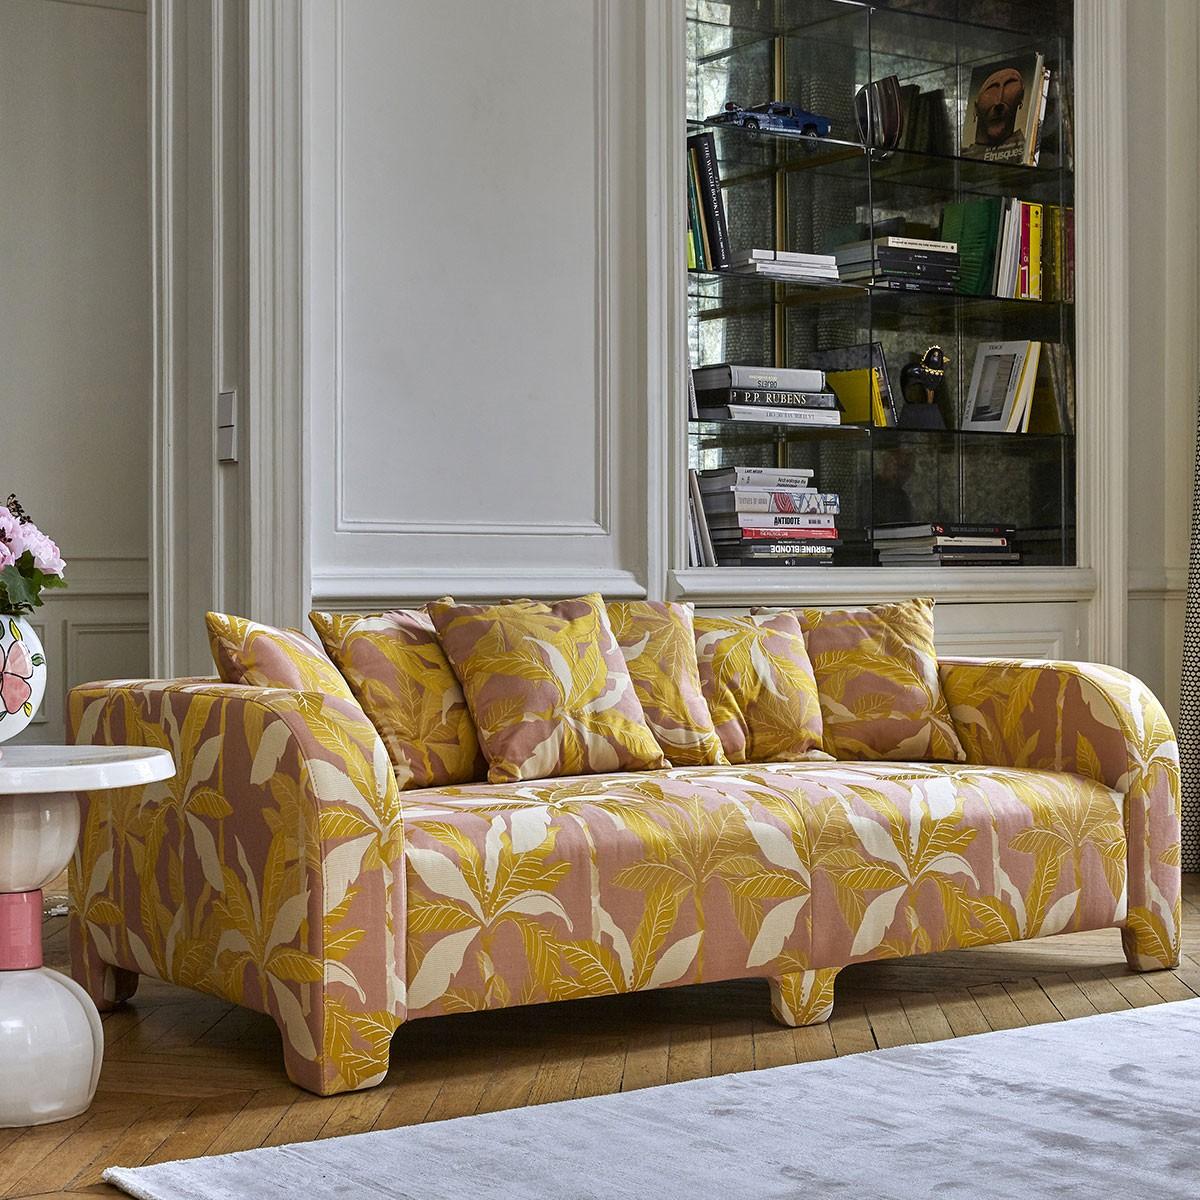 Popus Editions Graziella 3 Seater Sofa in Ocher London Linen Fabric In New Condition For Sale In Paris, FR